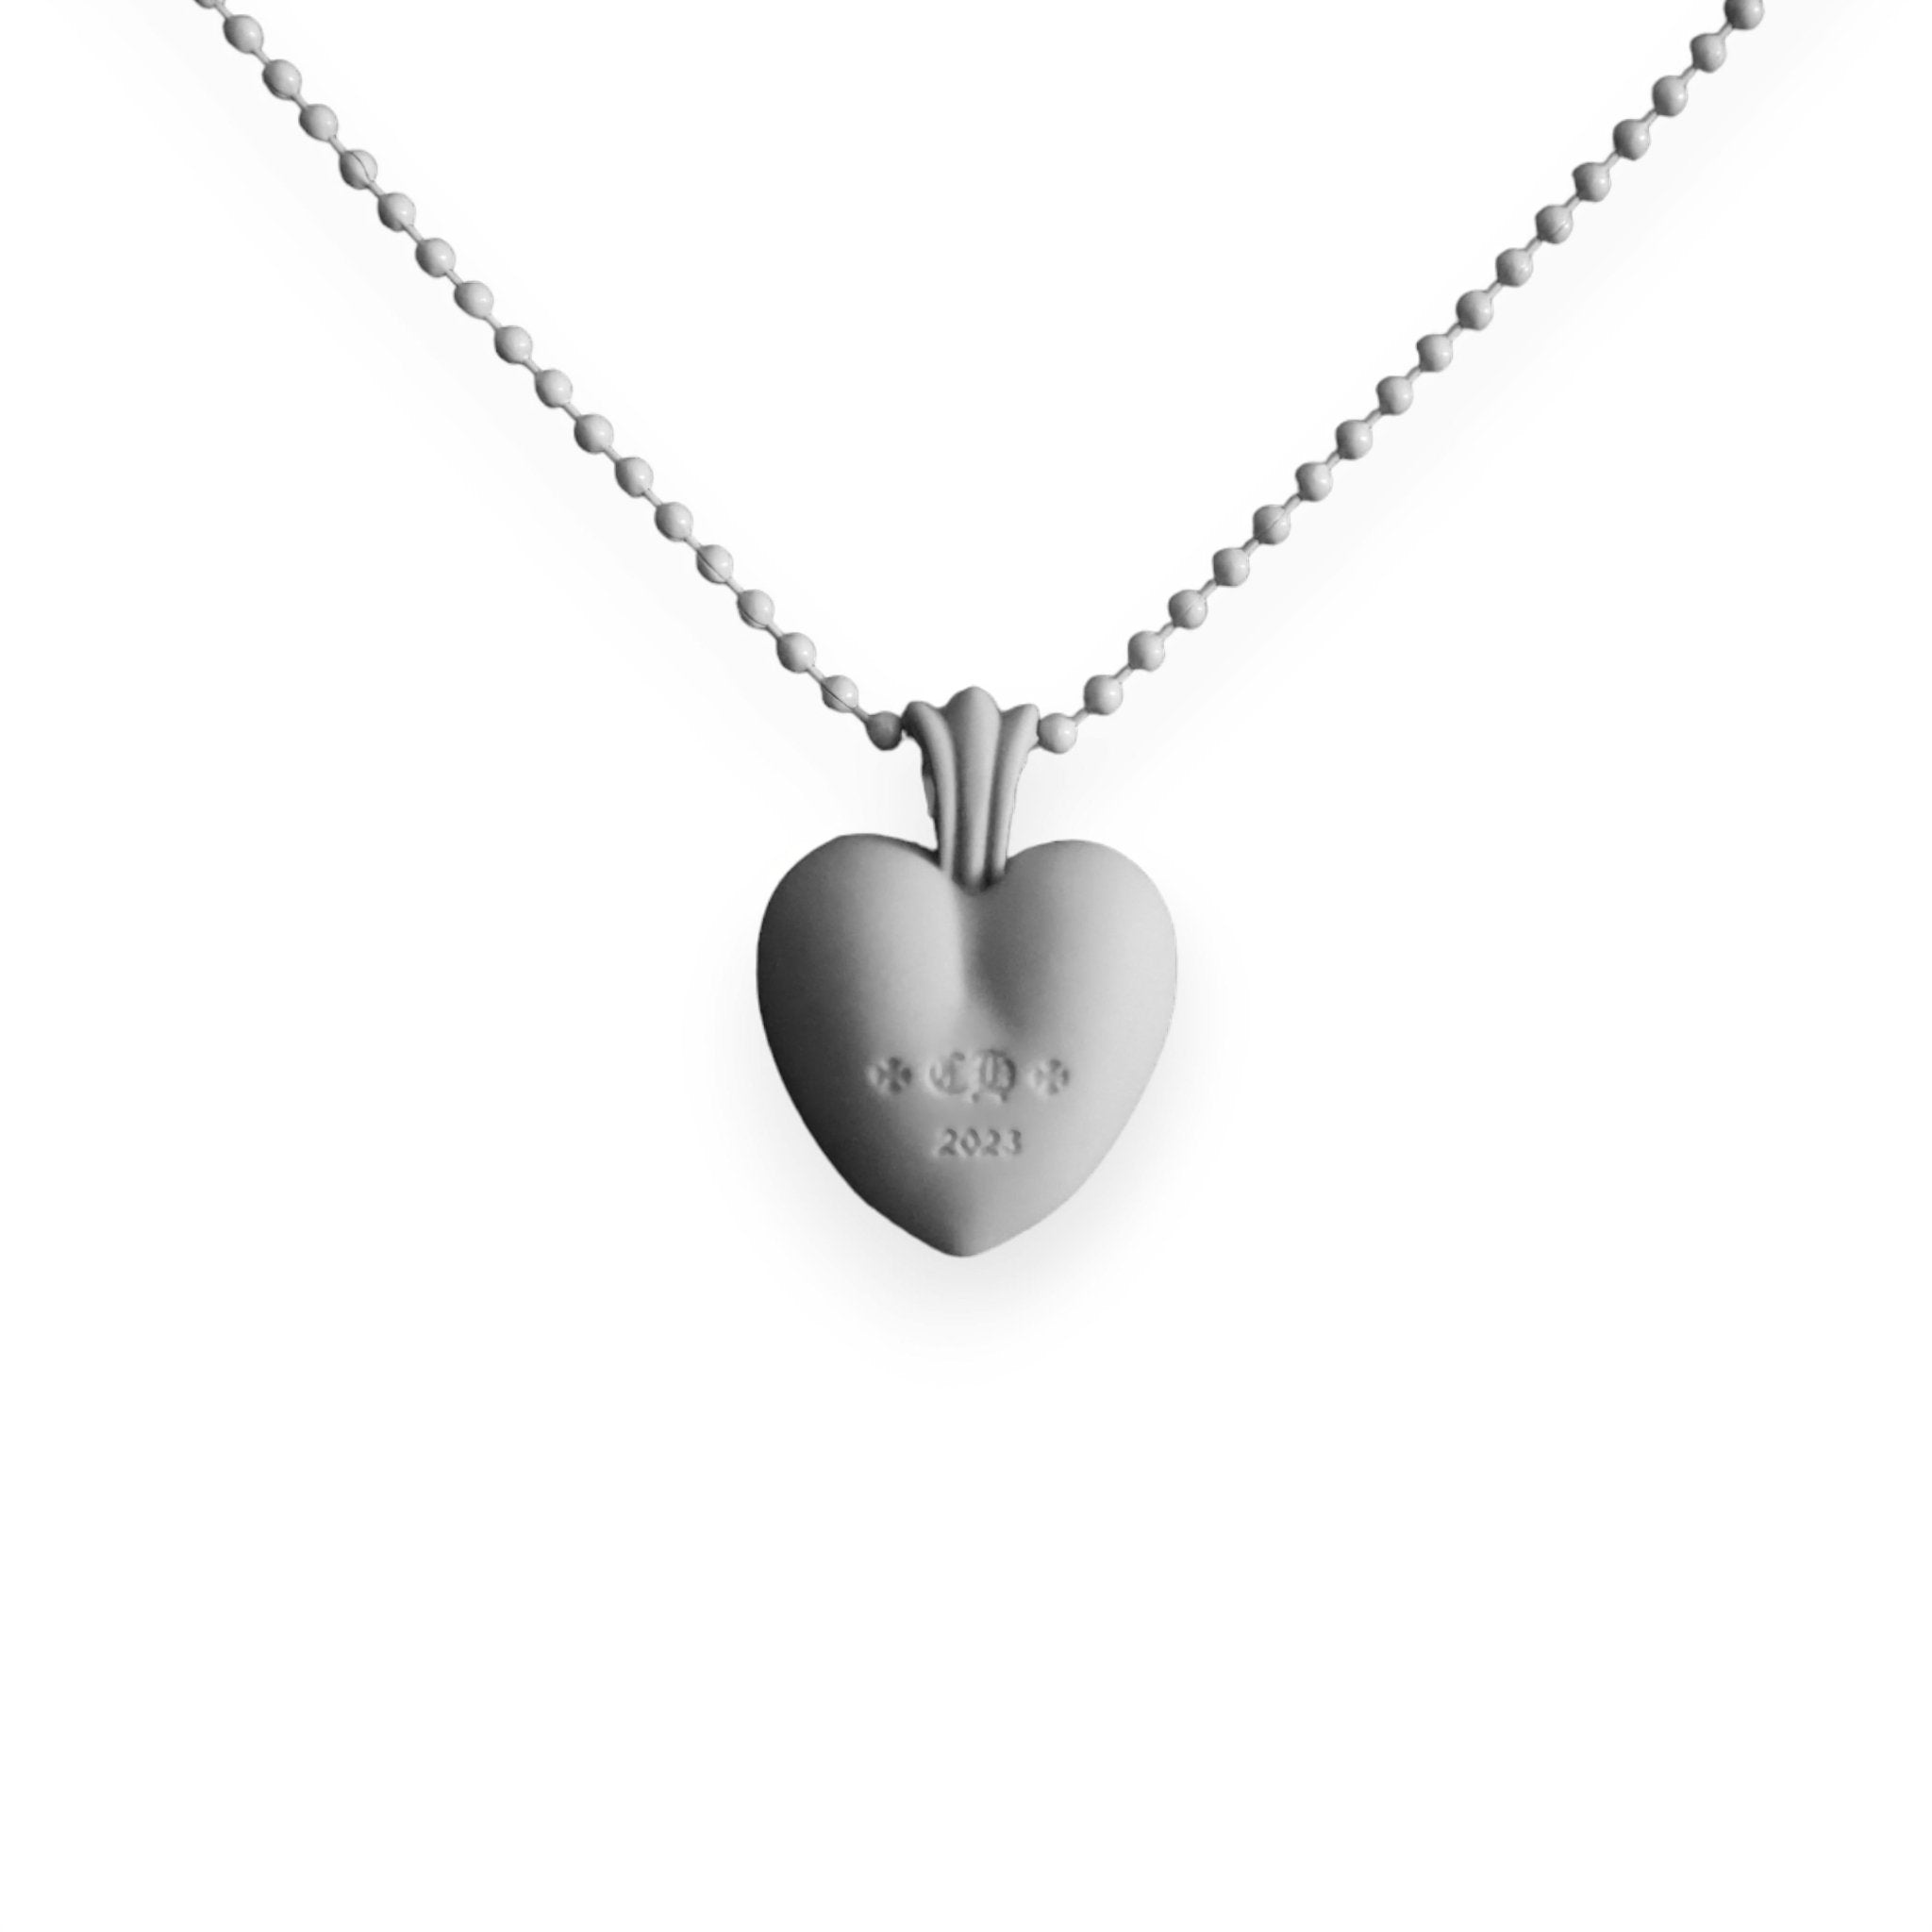 Chrome Hearts Silicone Heart Pendant Necklace - Chrome Hearts